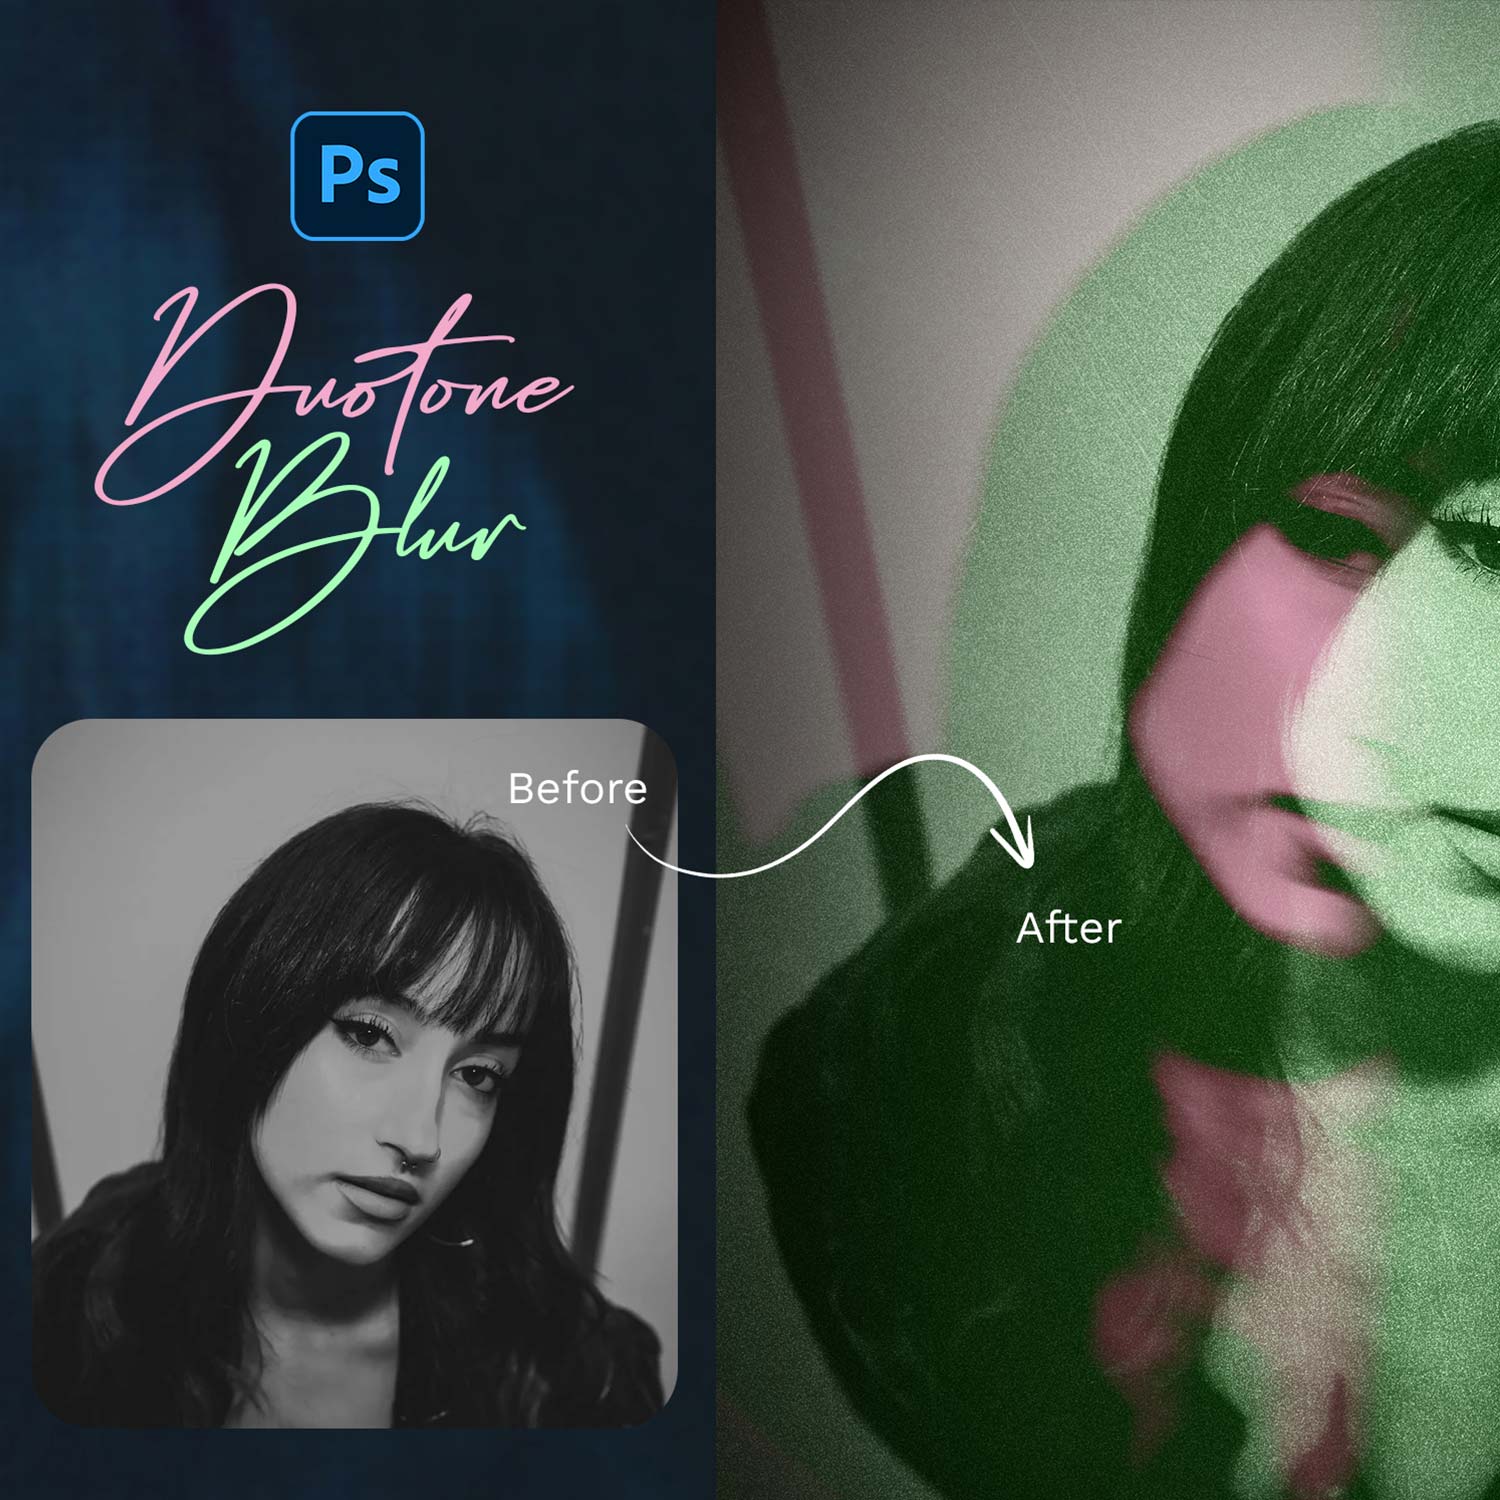 Duotone Blur Photo Effect preview image.